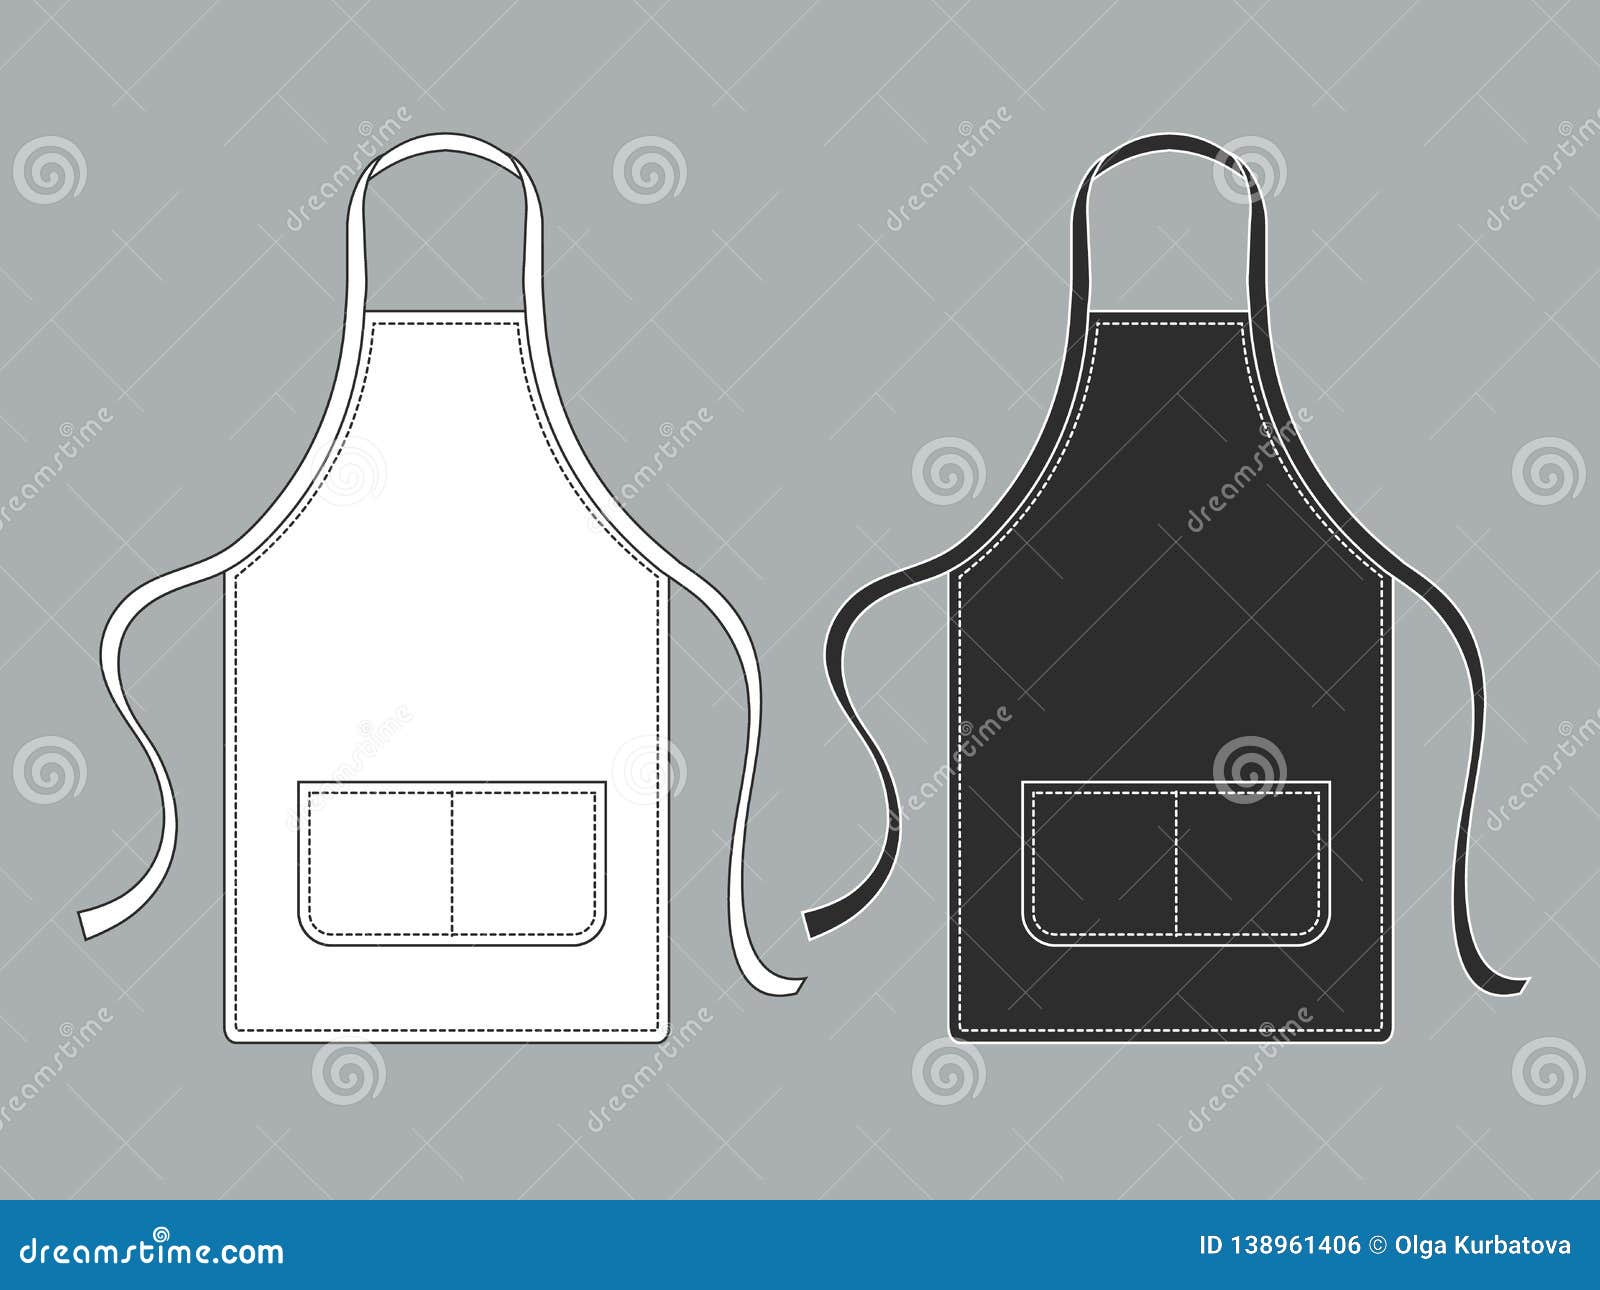 chef apron. black white culinary aprons chef uniform kitchen cotton kitchen worker woman wearing waiter vest template